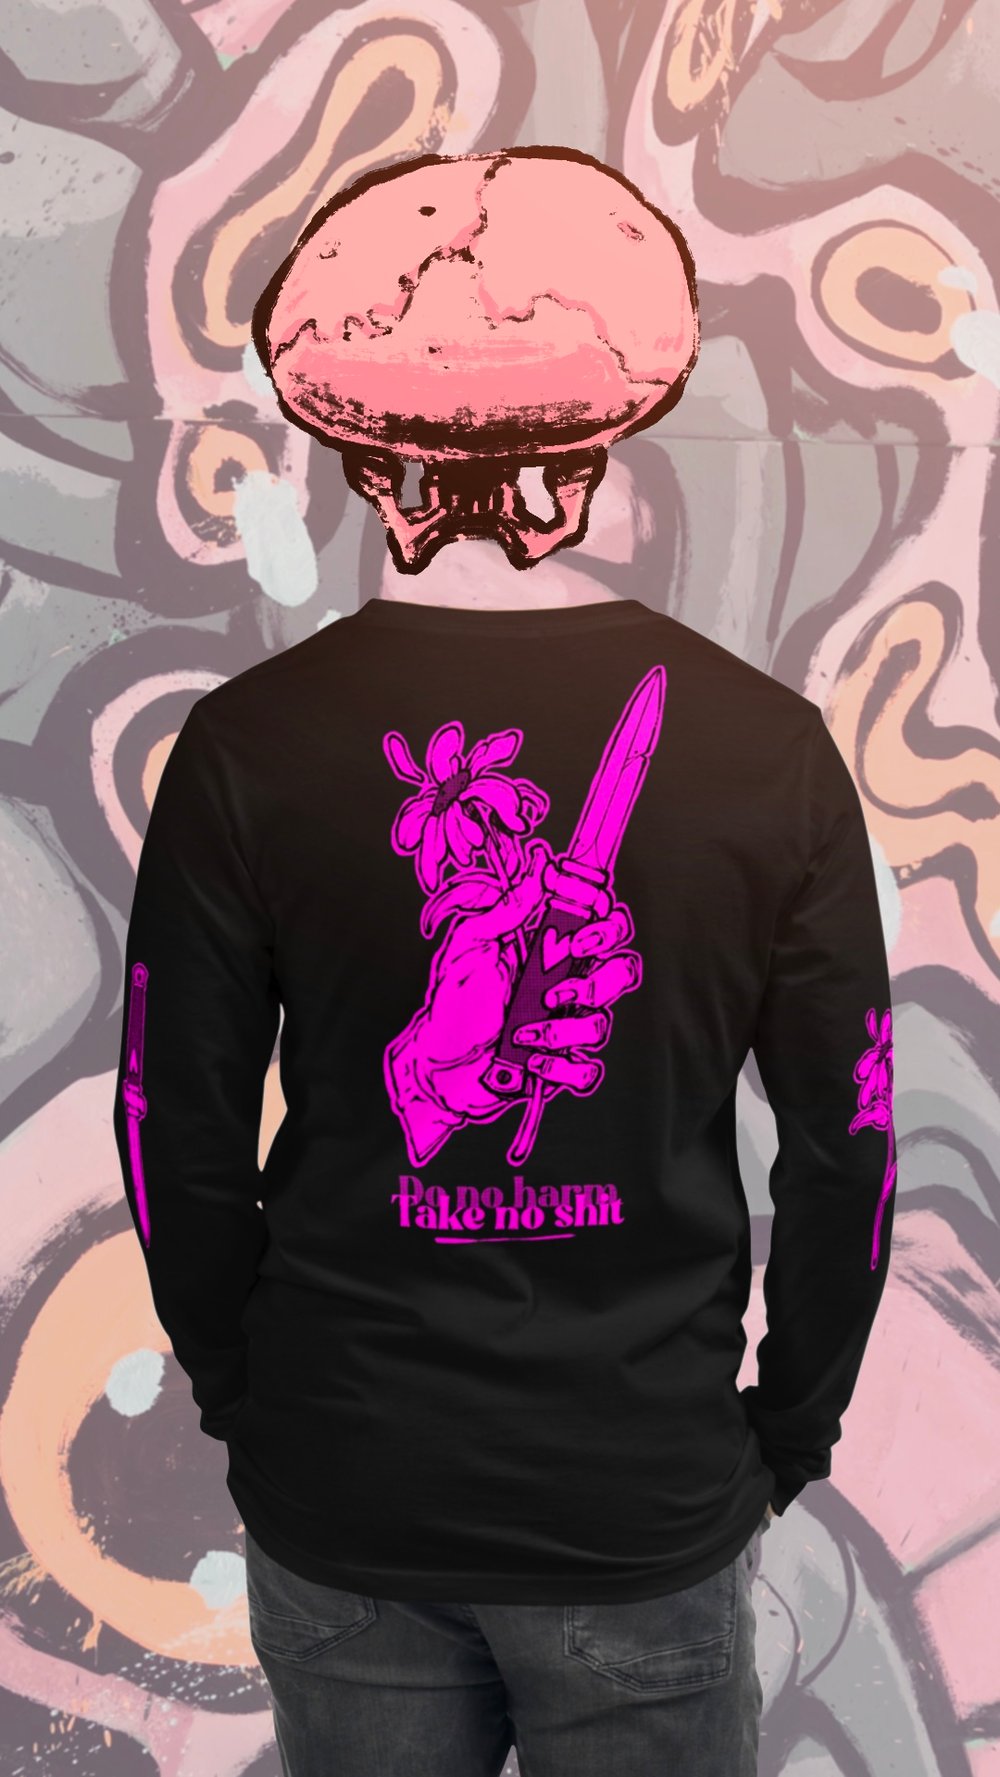 “Do no harm, take no shit” black and pink long sleeve shirt